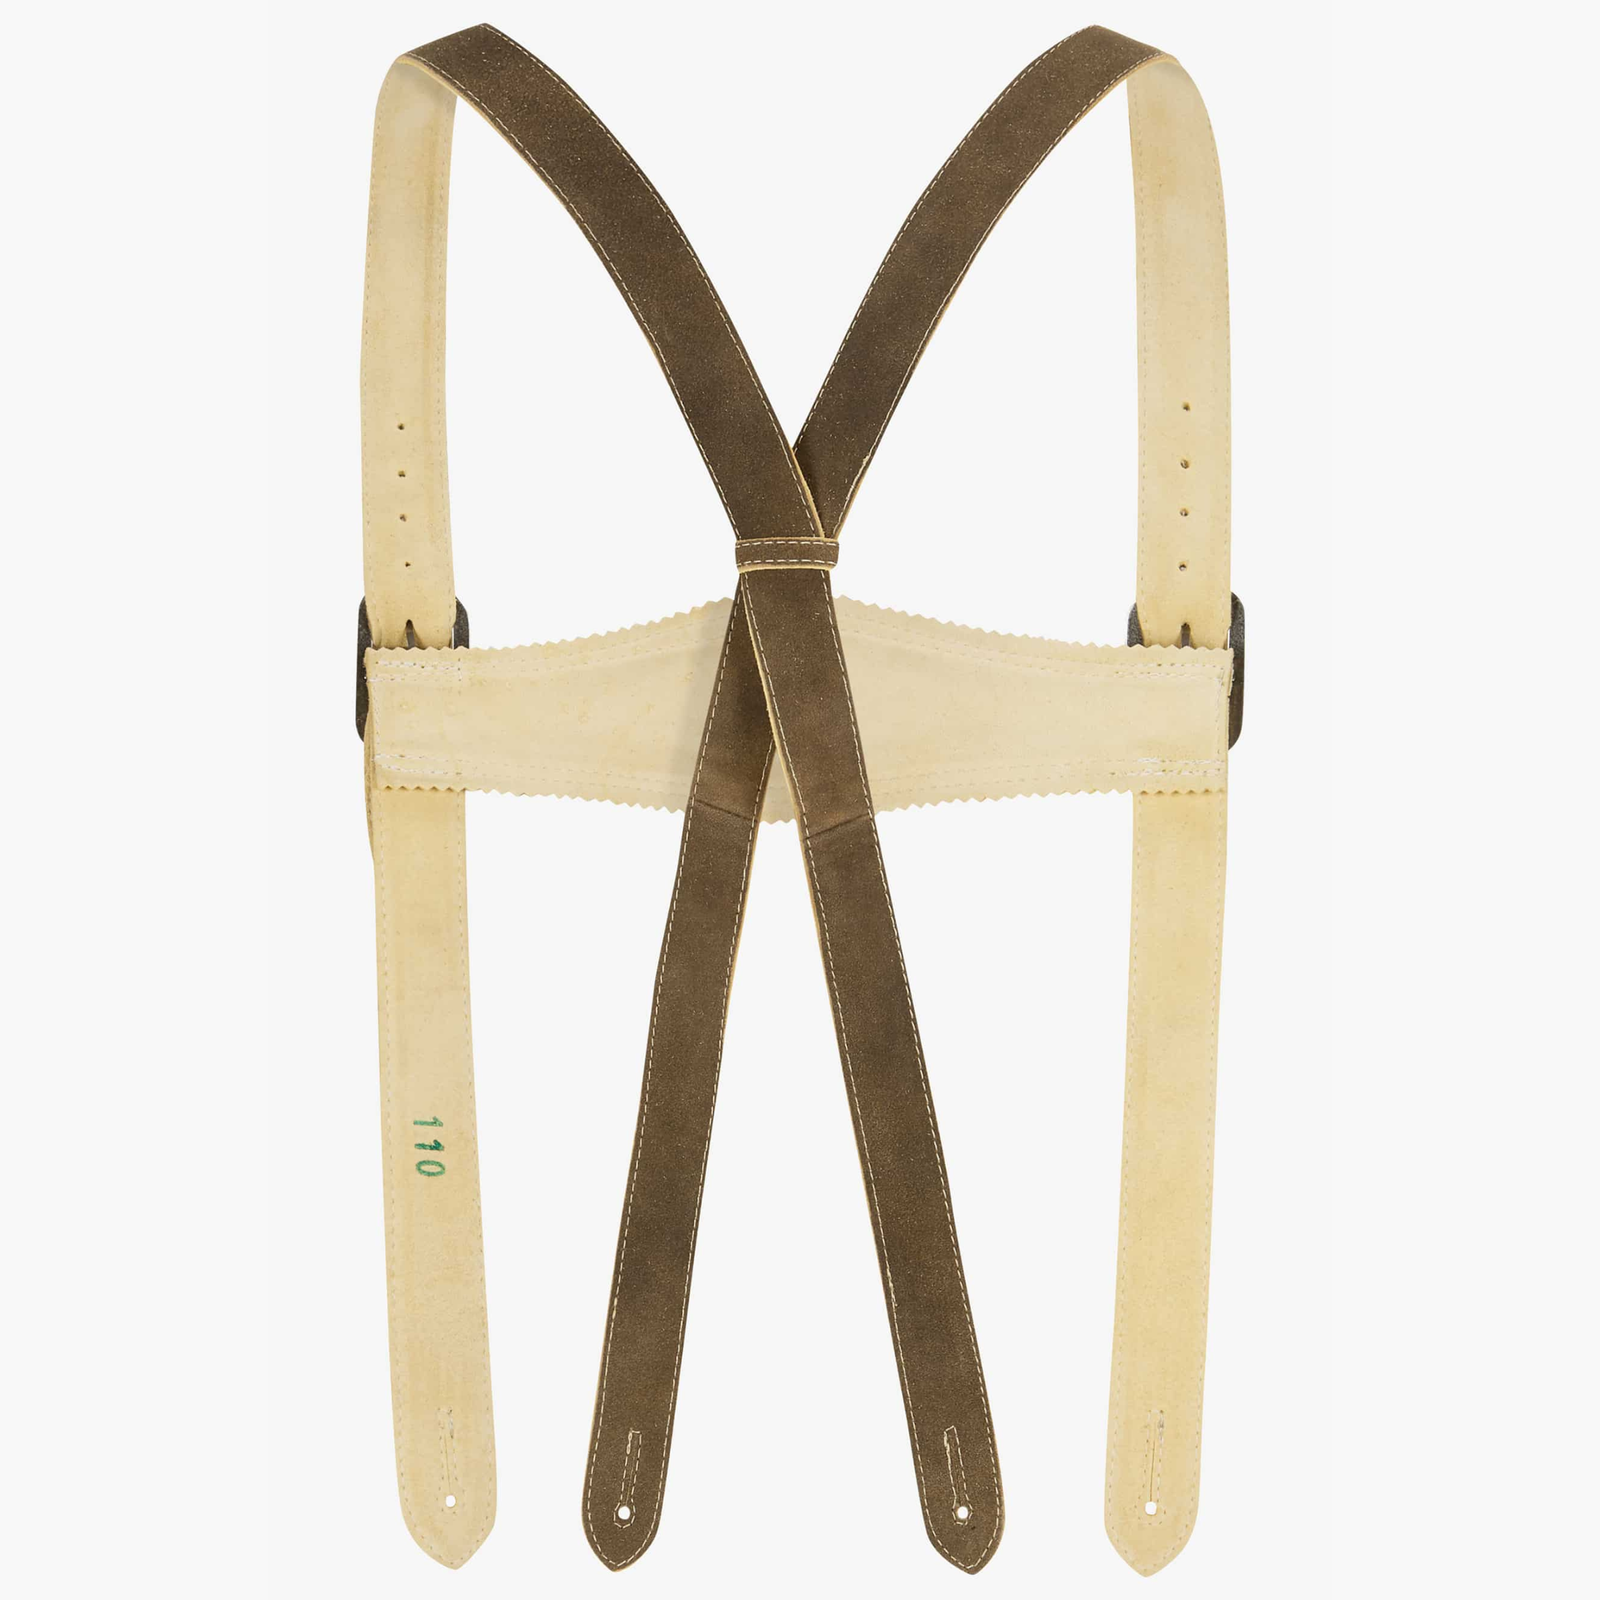 Lederhosen Suspenders